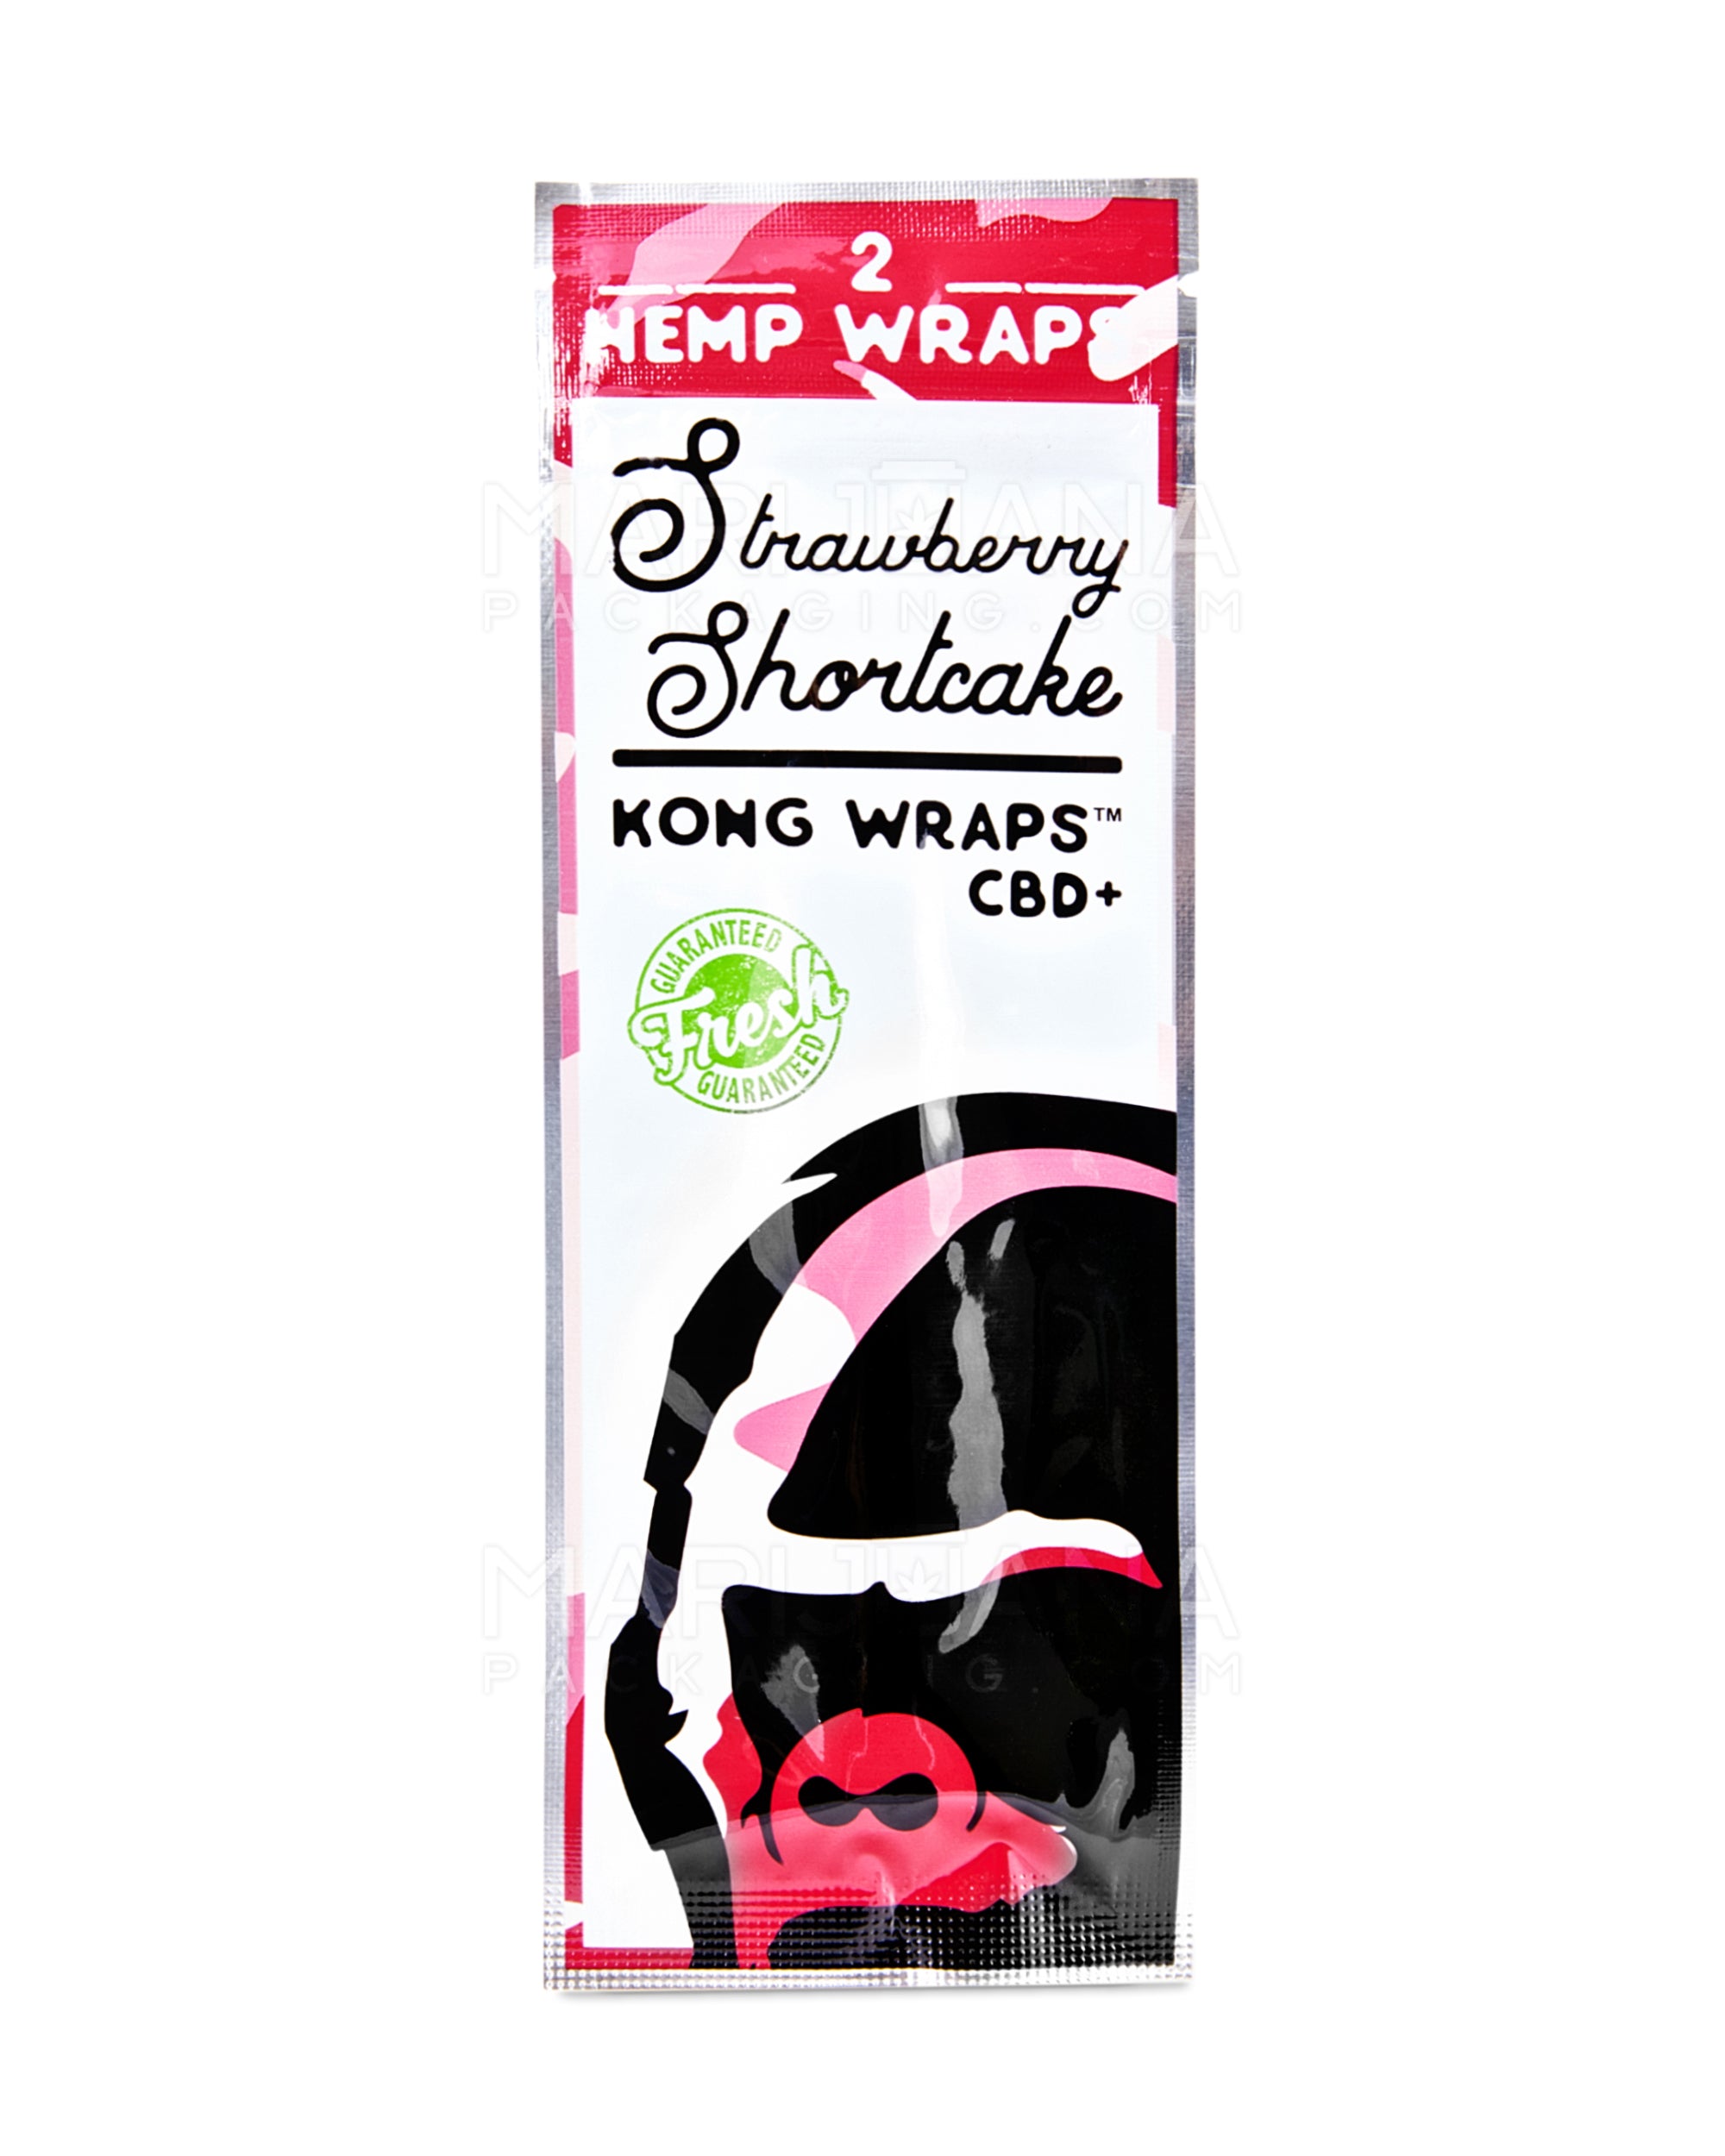 KONG WRAPS | 'Retail Display' Organic Hemp Blunt Wraps | CBD Infused - Strawberry Shortcake - 25 Count